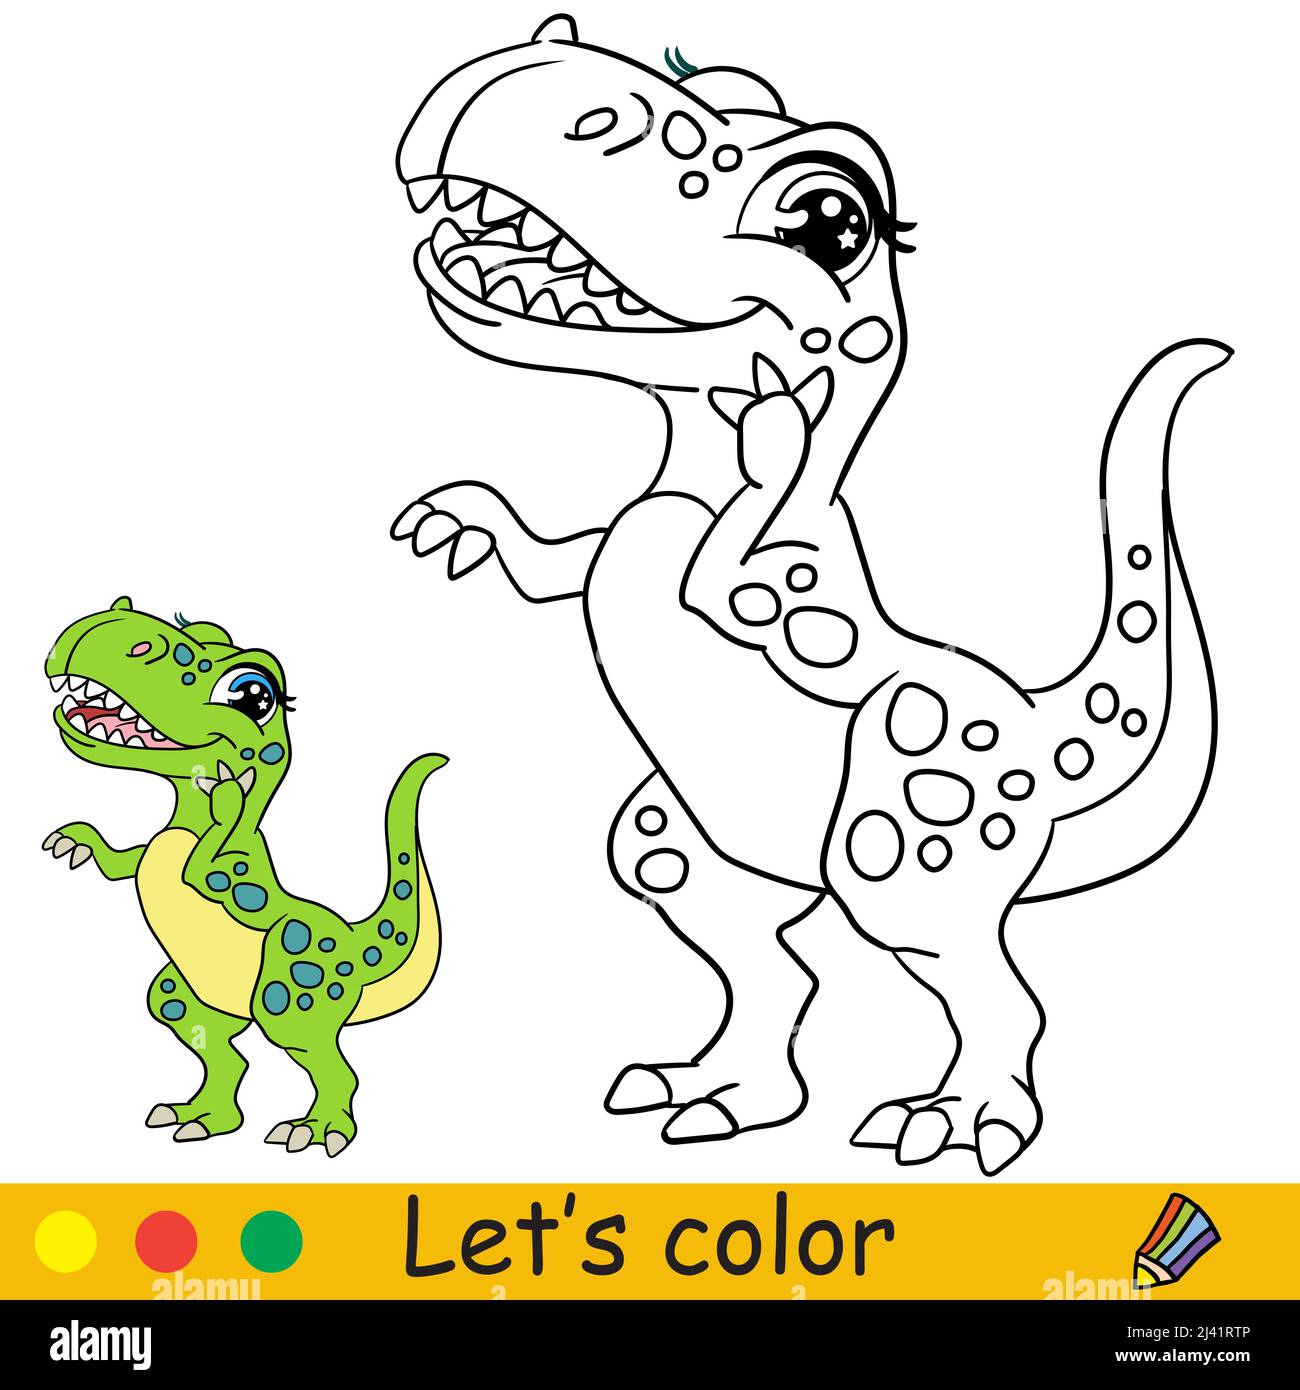 Libro para colorear para niños dino lindo vector